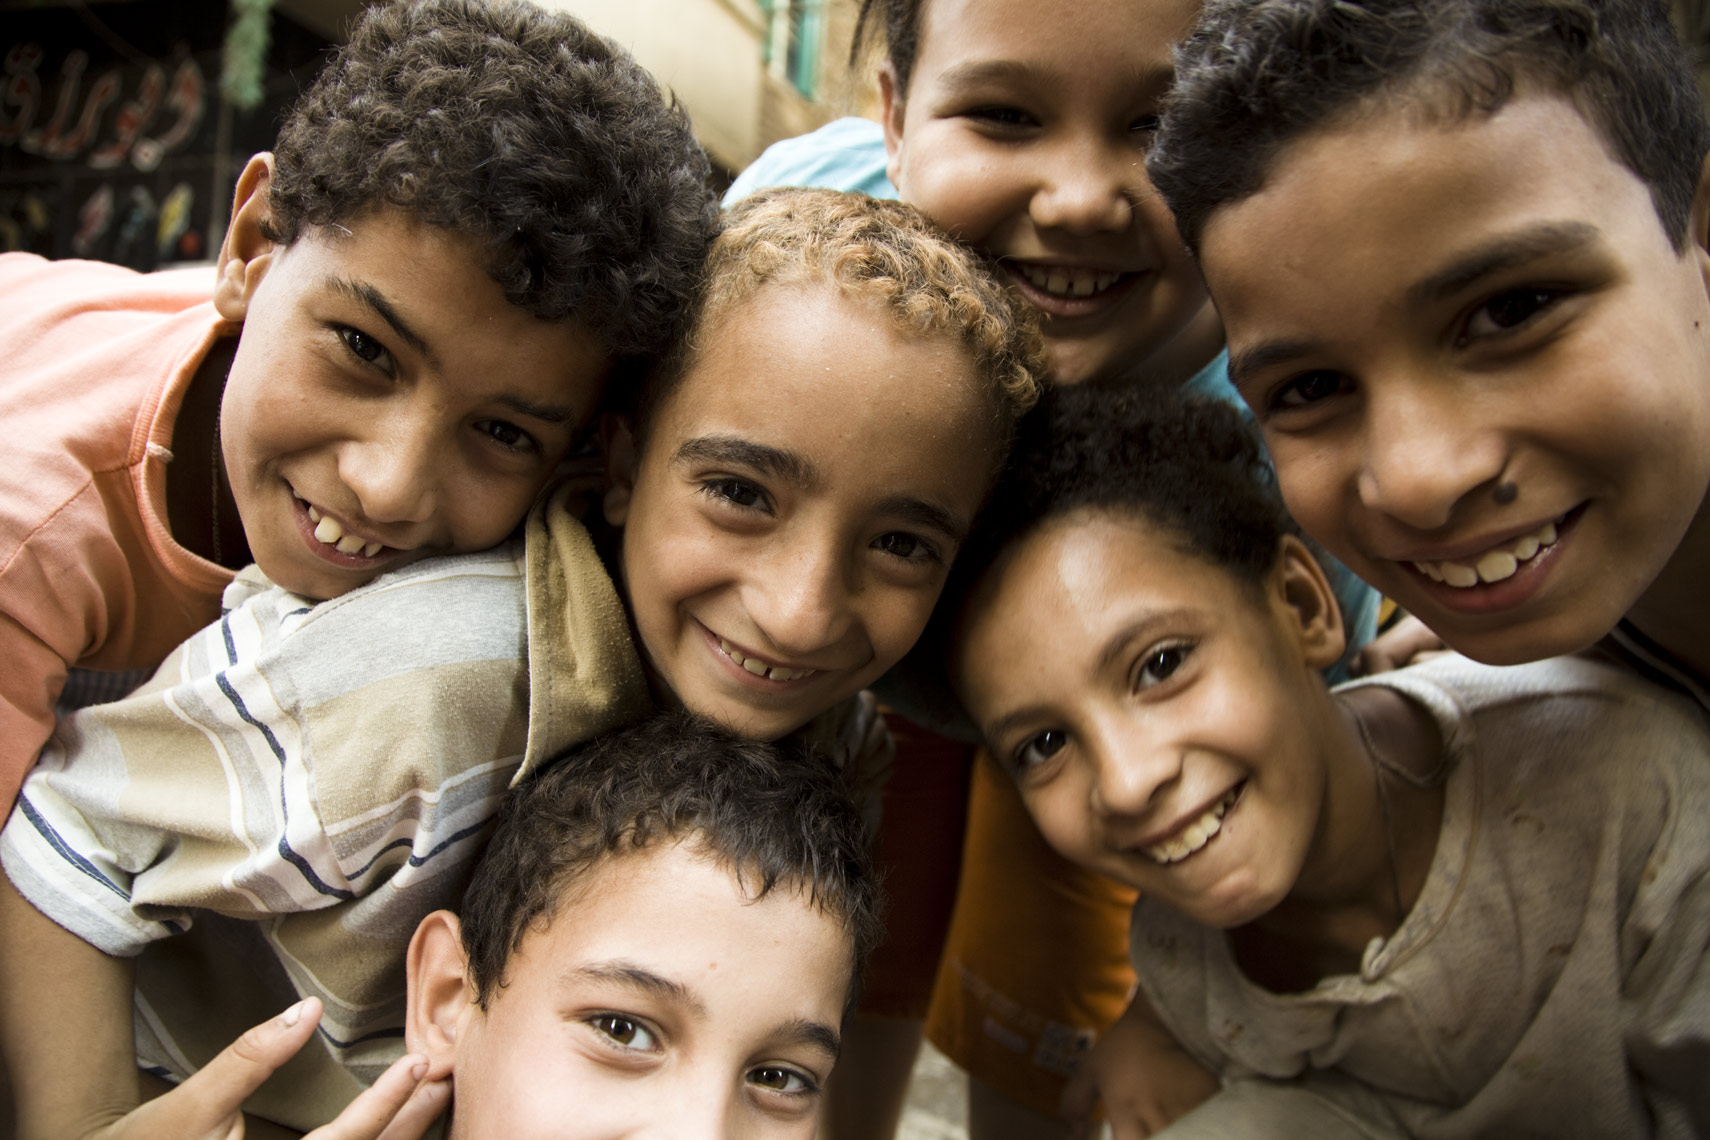 SMILING CHILDREN IN CAIRO